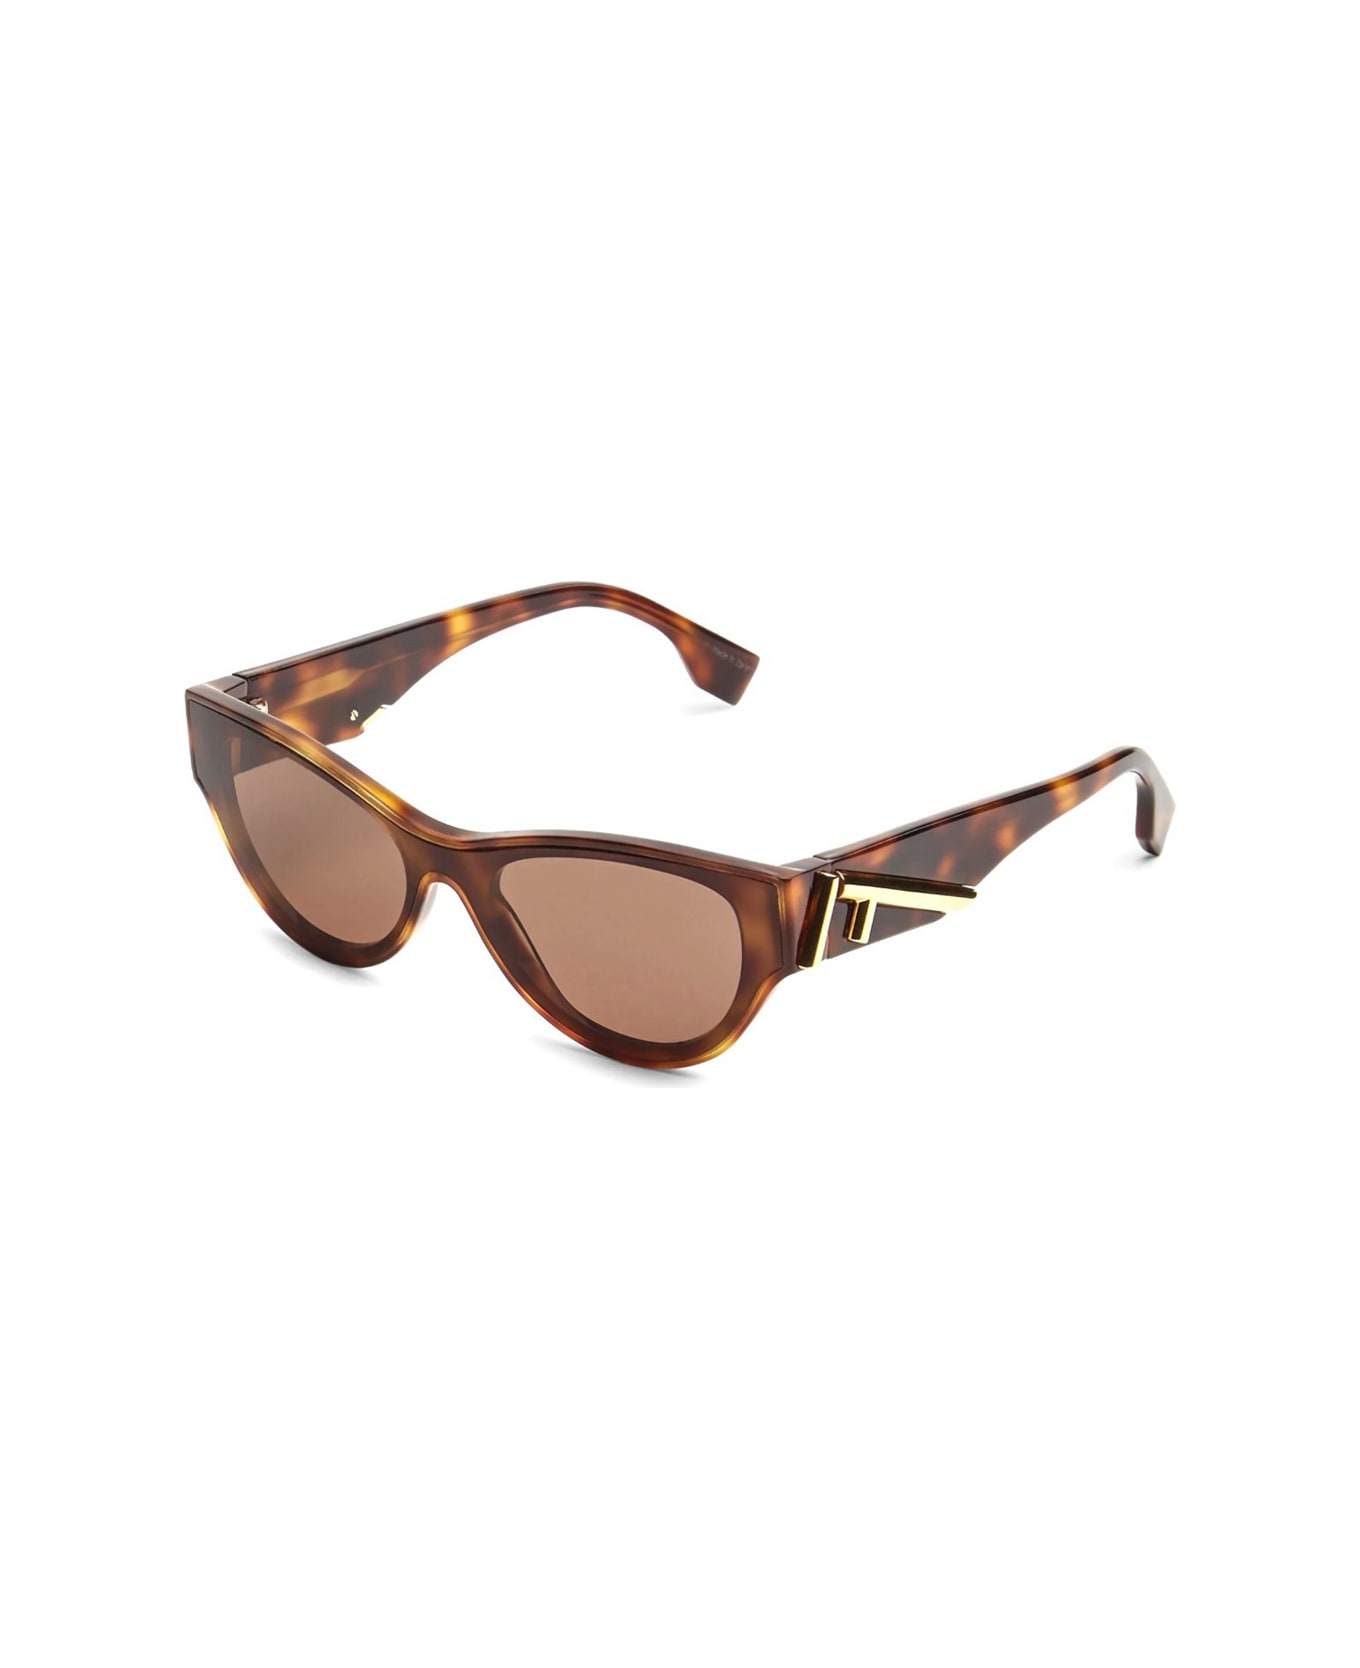 Fendi Eyewear Fe40135i 53e Sunglasses - Havana/Marrone